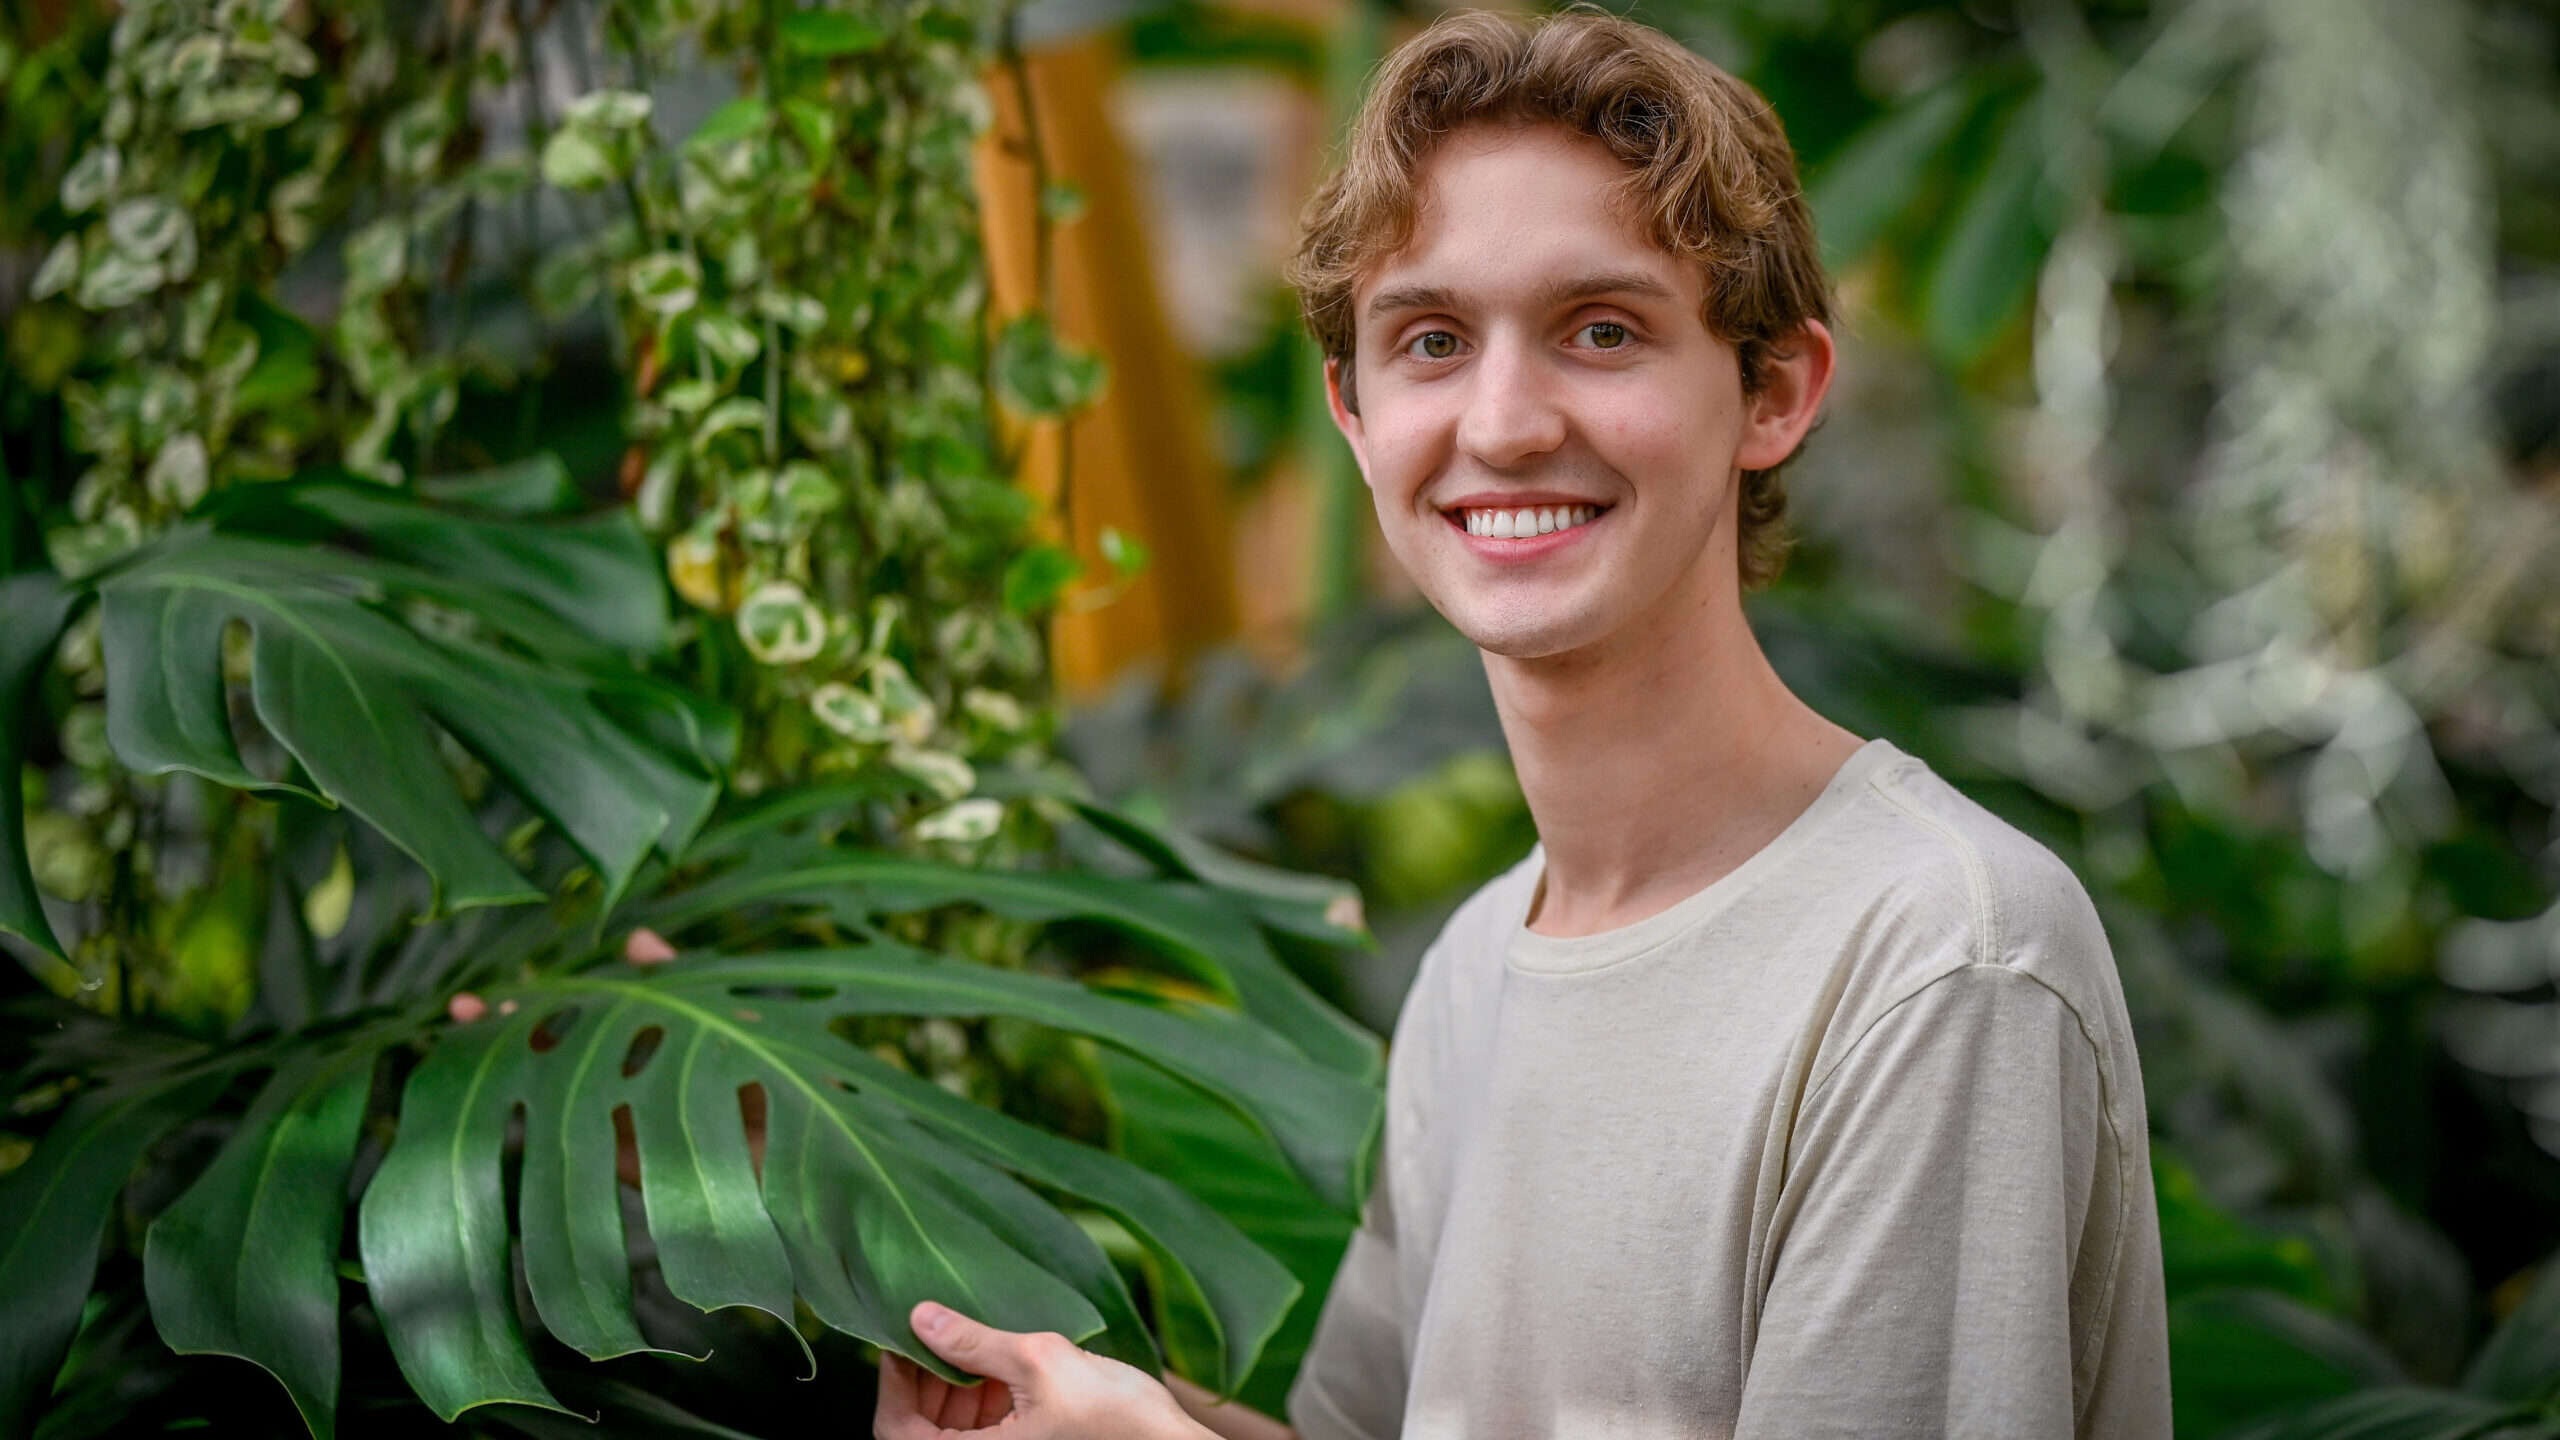 Brady Farlow posing among plants